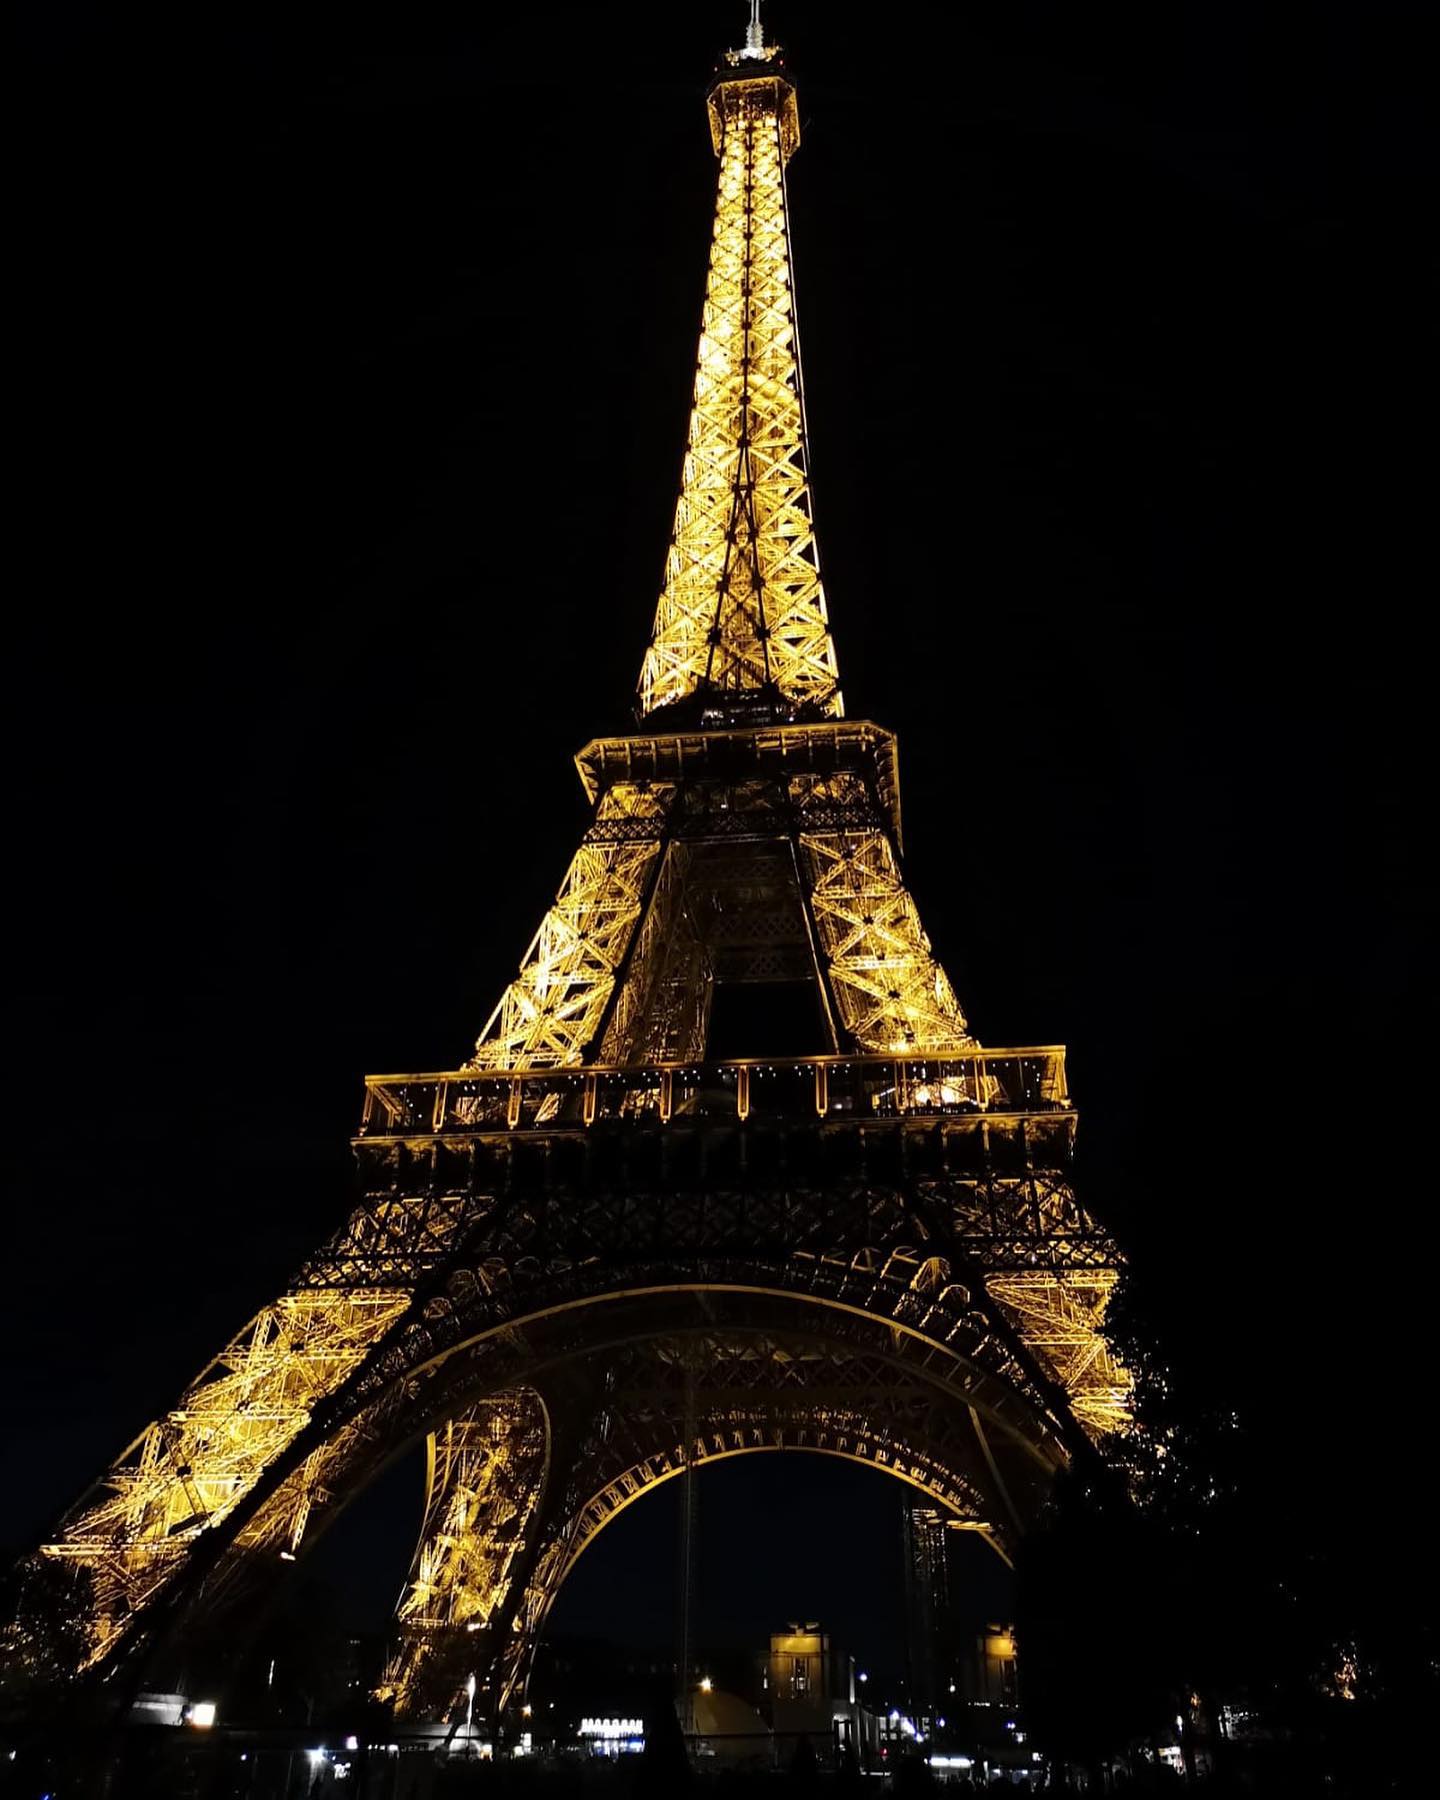 Eiffel Tower 😍 
#paris #eiffeltoweratnight #eiffeltower #nofilter #nightwalk #memories #goodtime #bringmeback